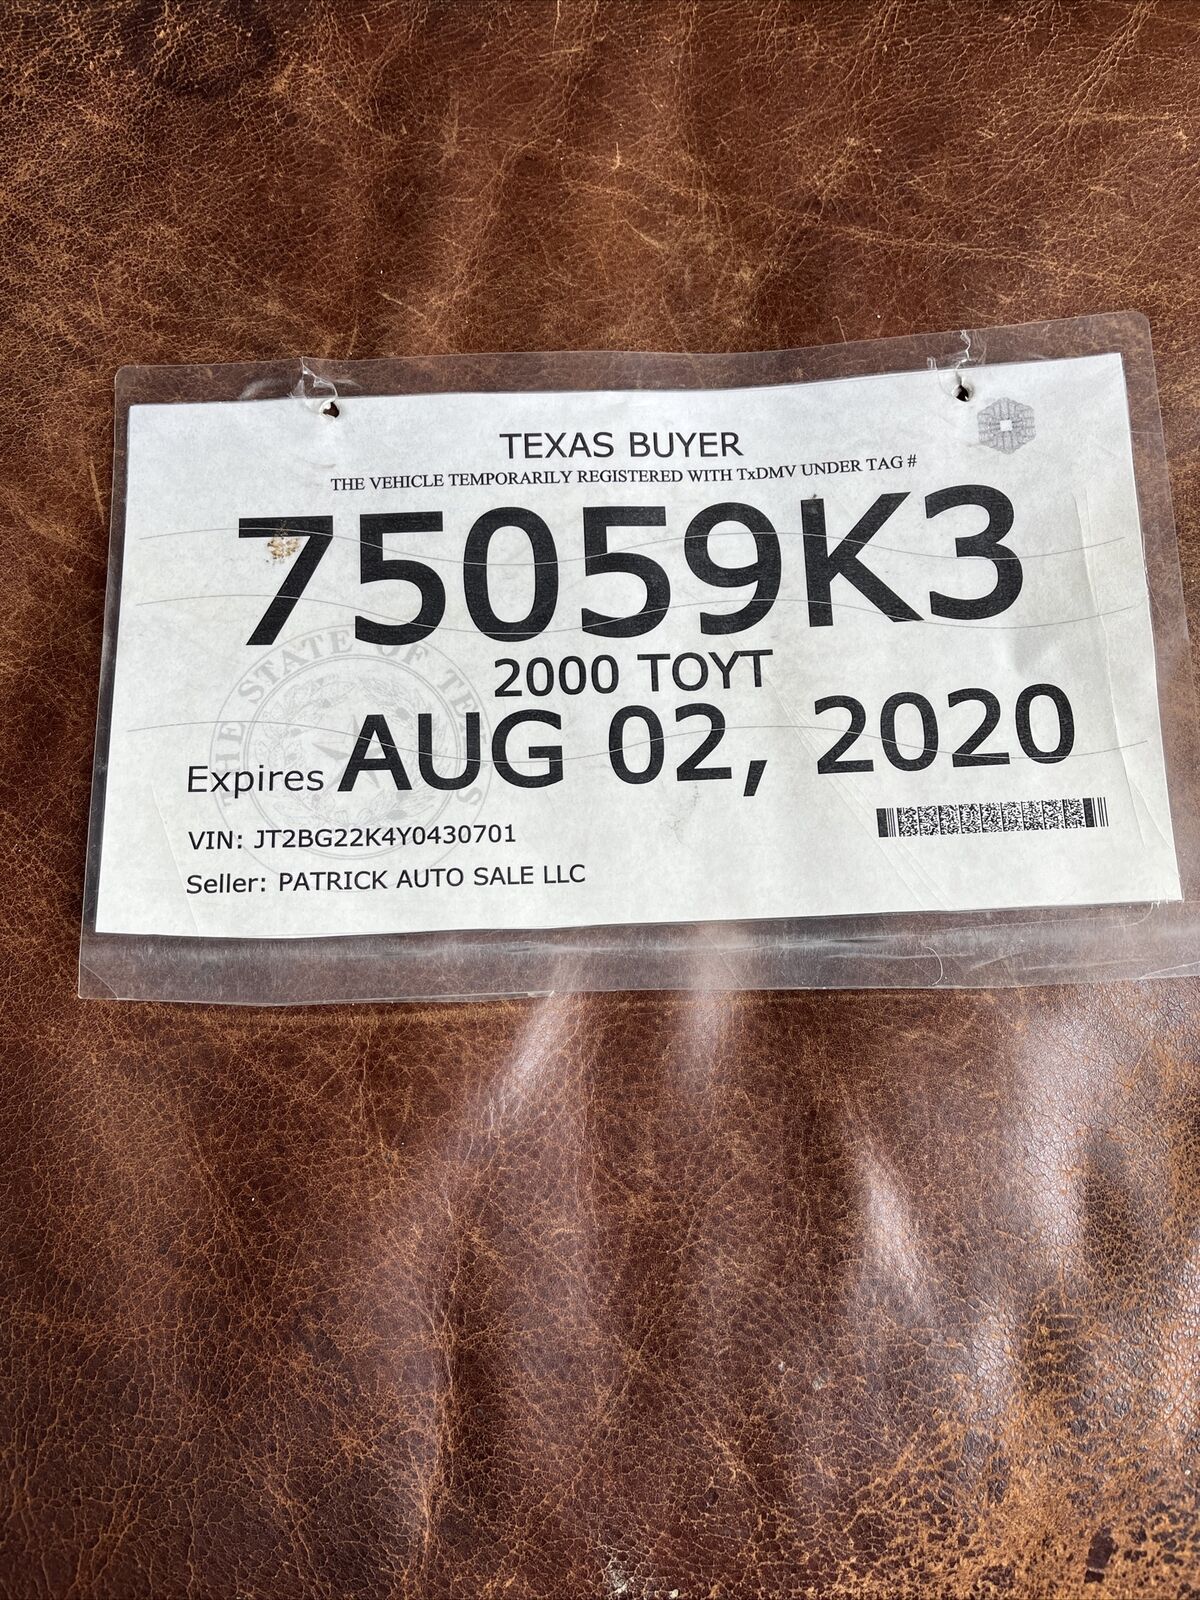 2020 Texas BUYER license plate temporary tag Patrick Auto Sales # 75059 K3